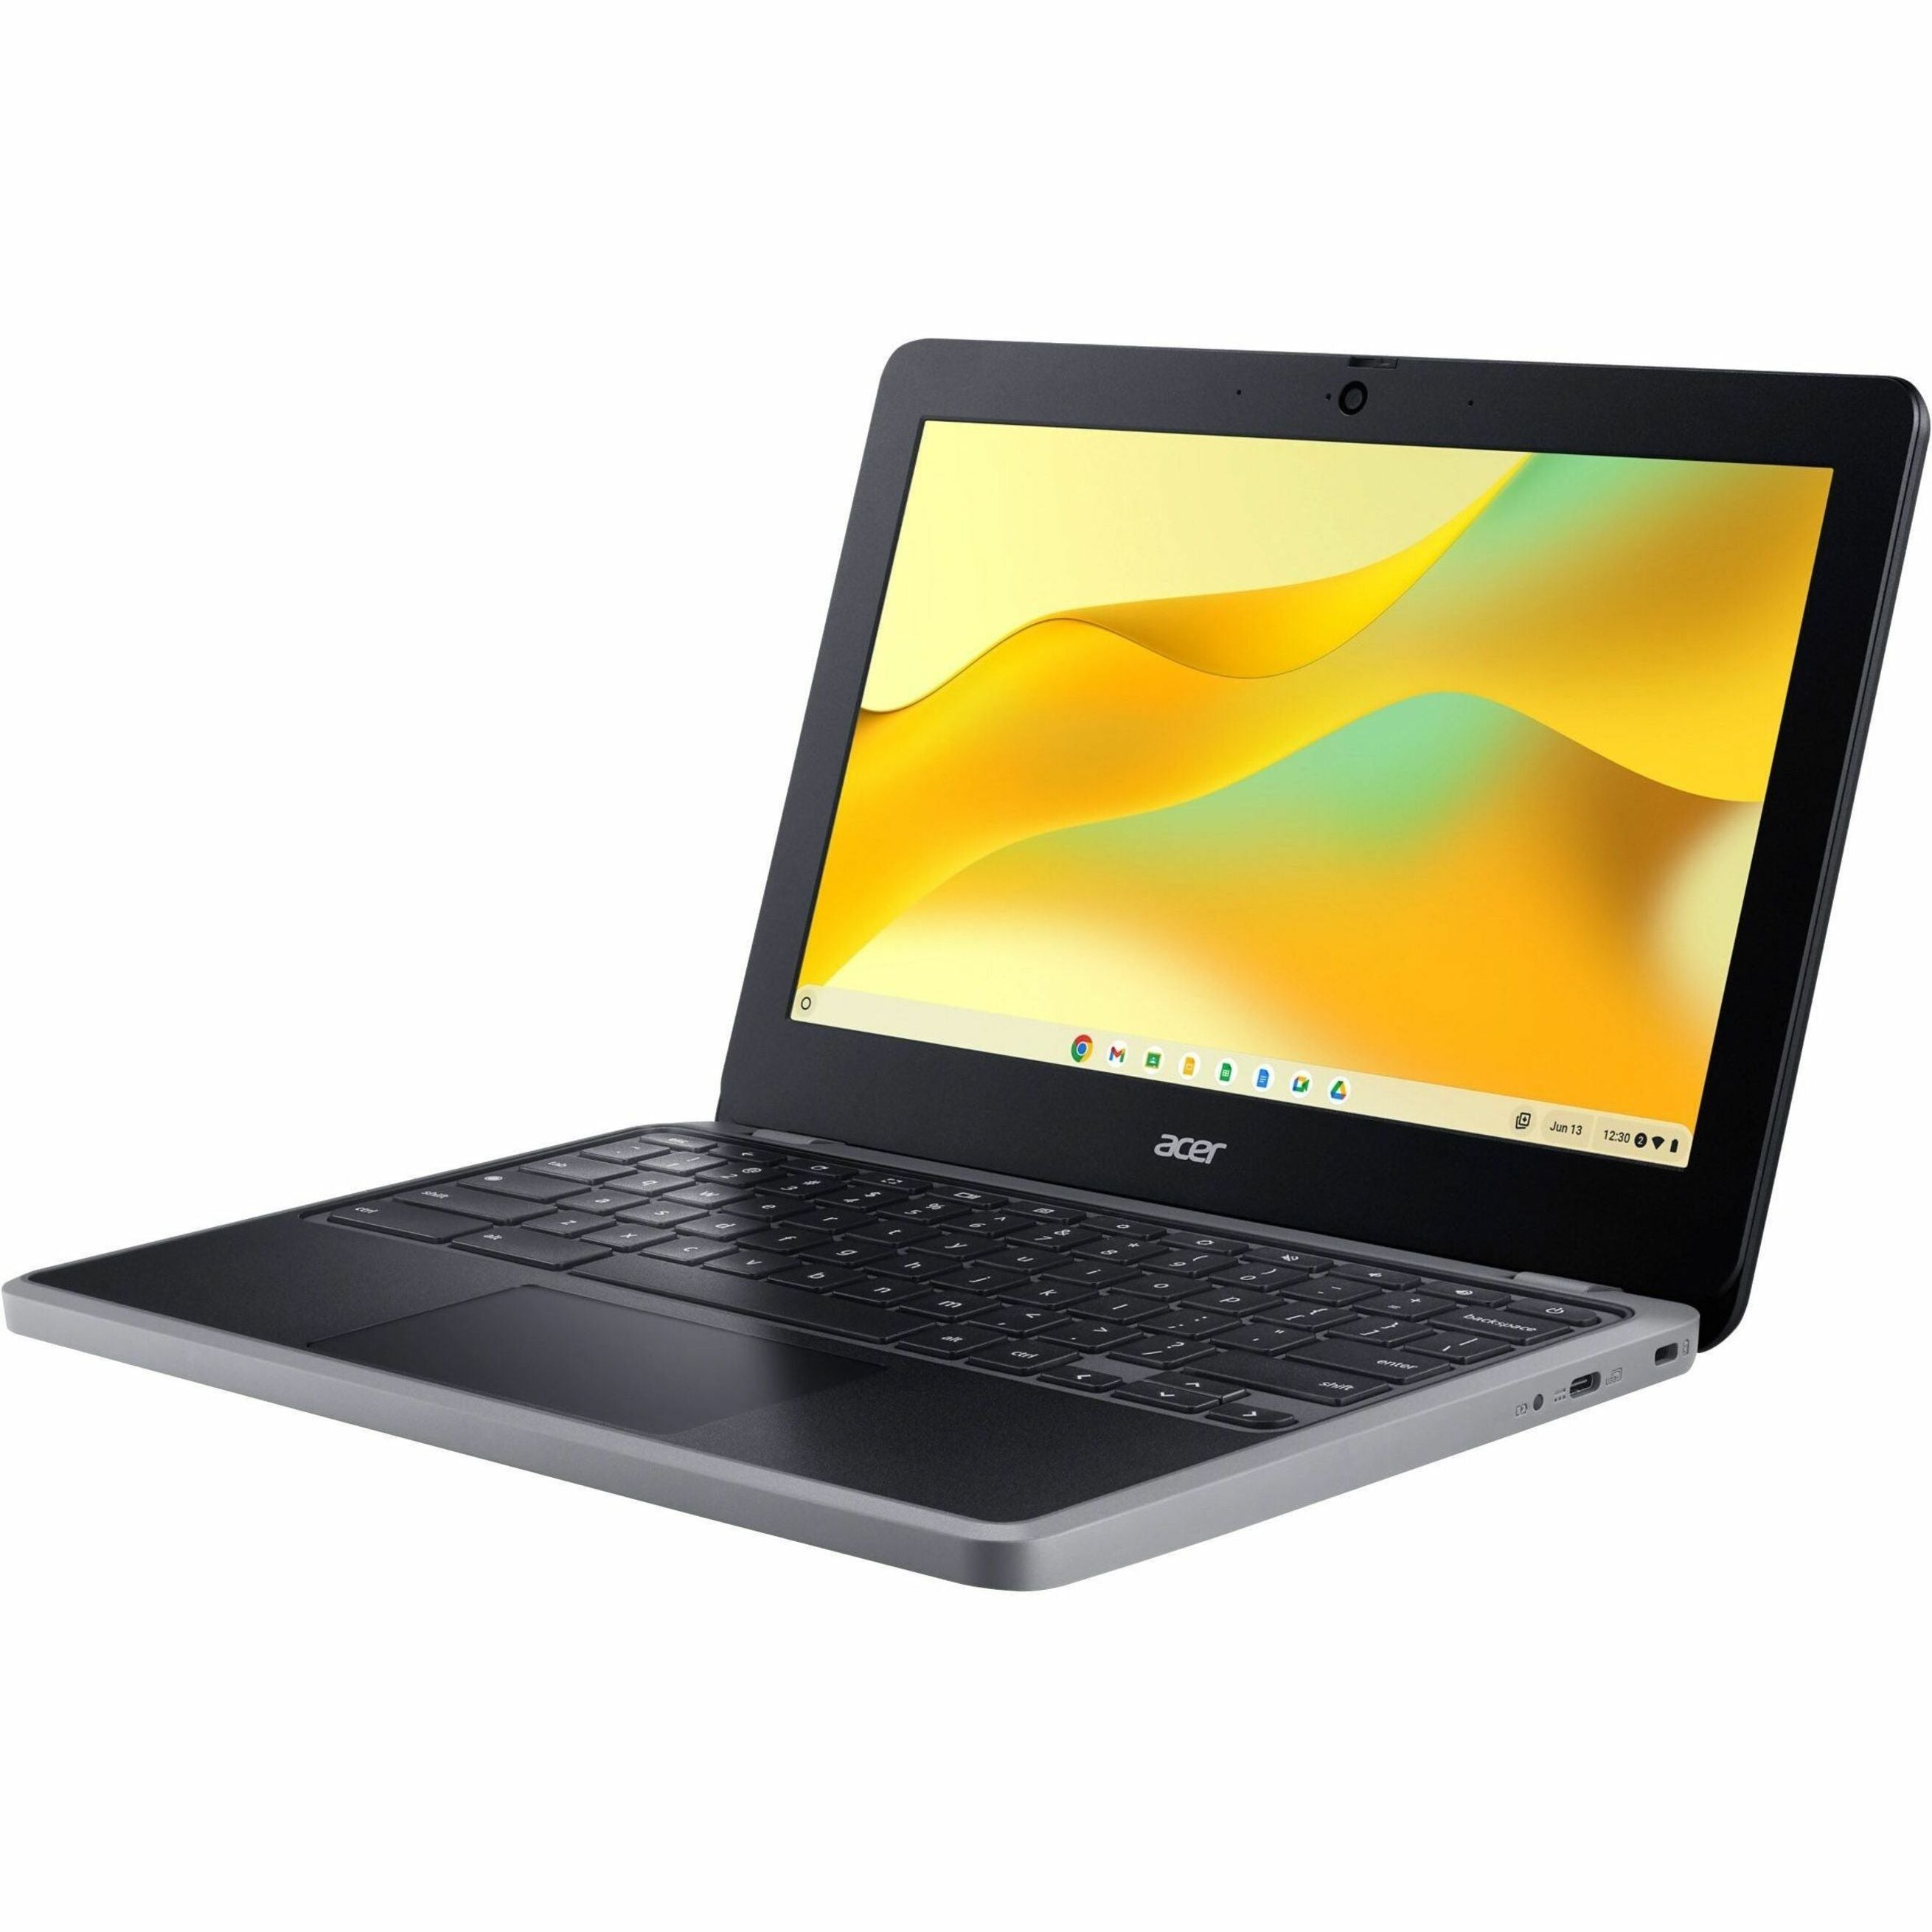 Acer NX.KK7AA.001 Chromebook 311 C723T-K245 Chromebook, 11.6 HD Touchscreen, 4GB RAM, 32GB Flash Memory, ChromeOS